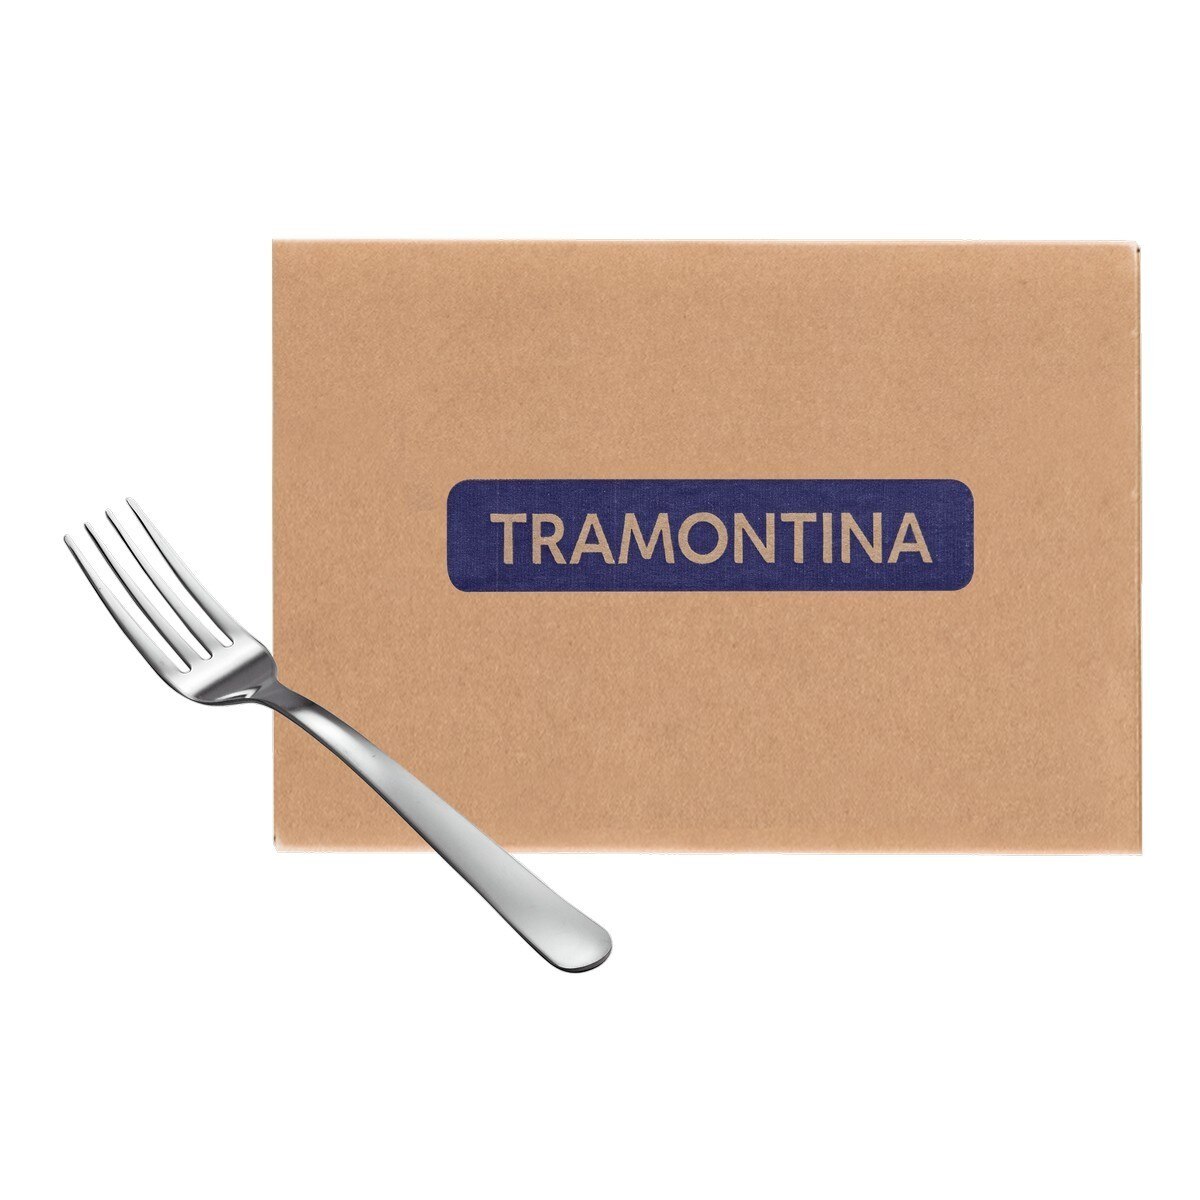 Tramontina 巴西製不鏽鋼餐叉 600件組